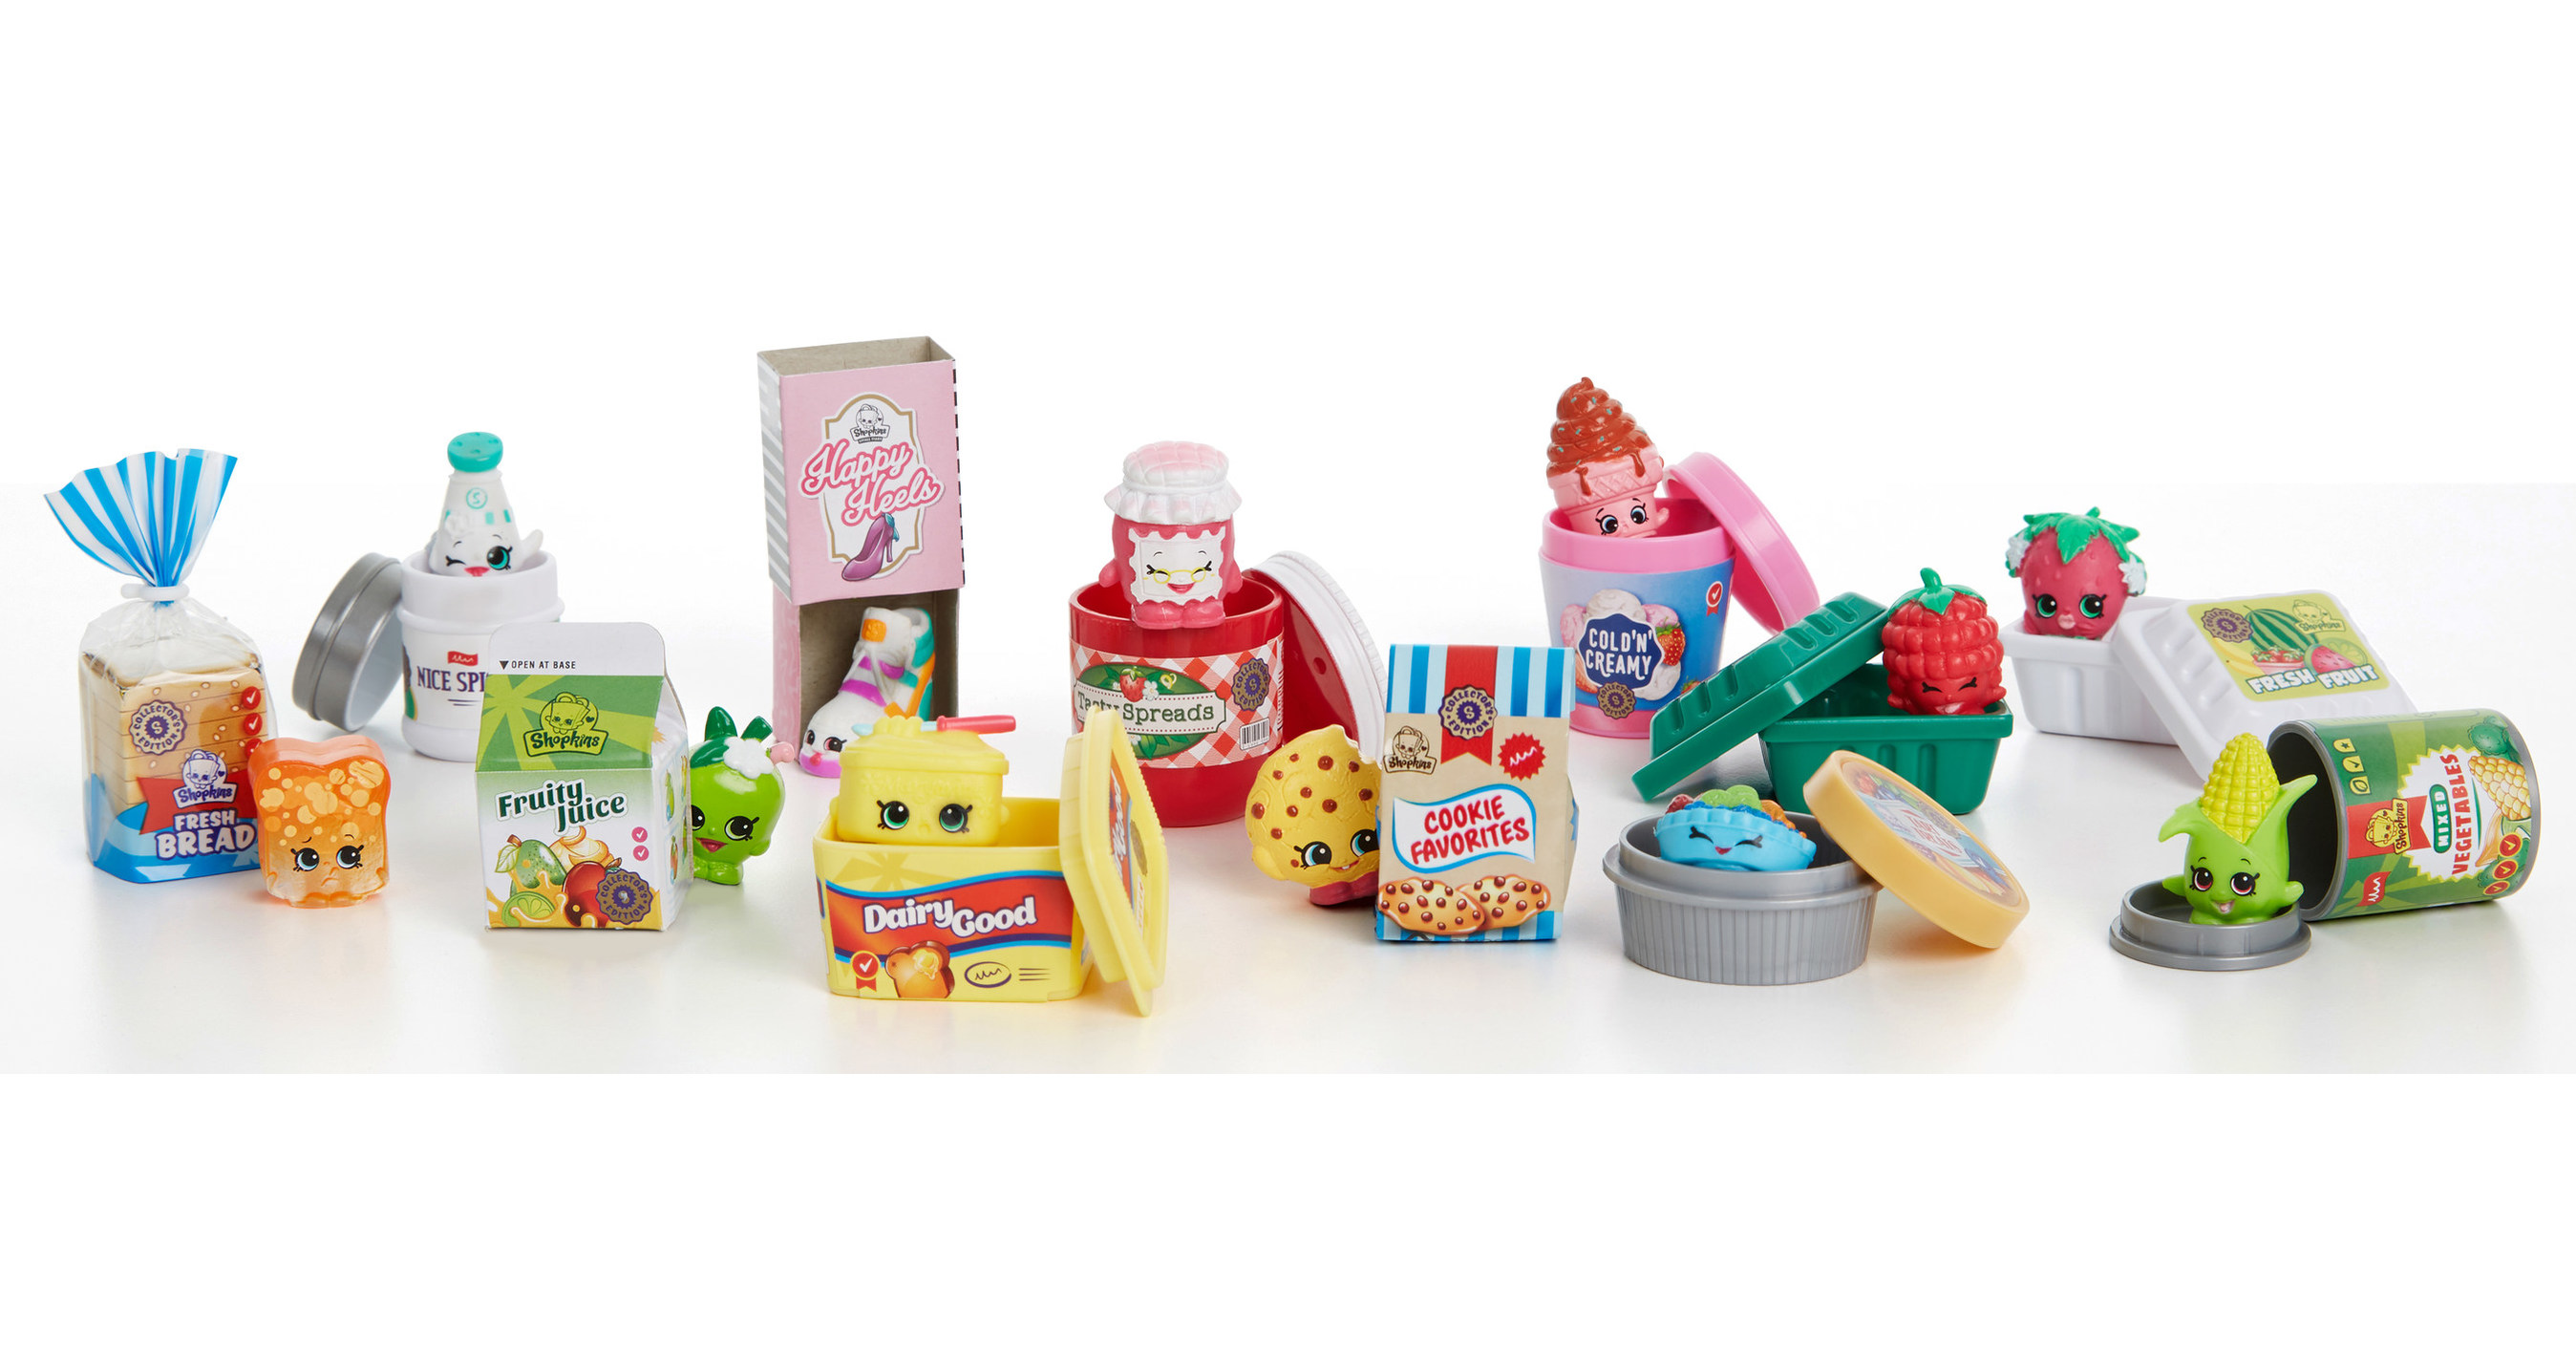 Shopkins Season 2 Mini Figure 2-Pack Moose Toys - ToyWiz